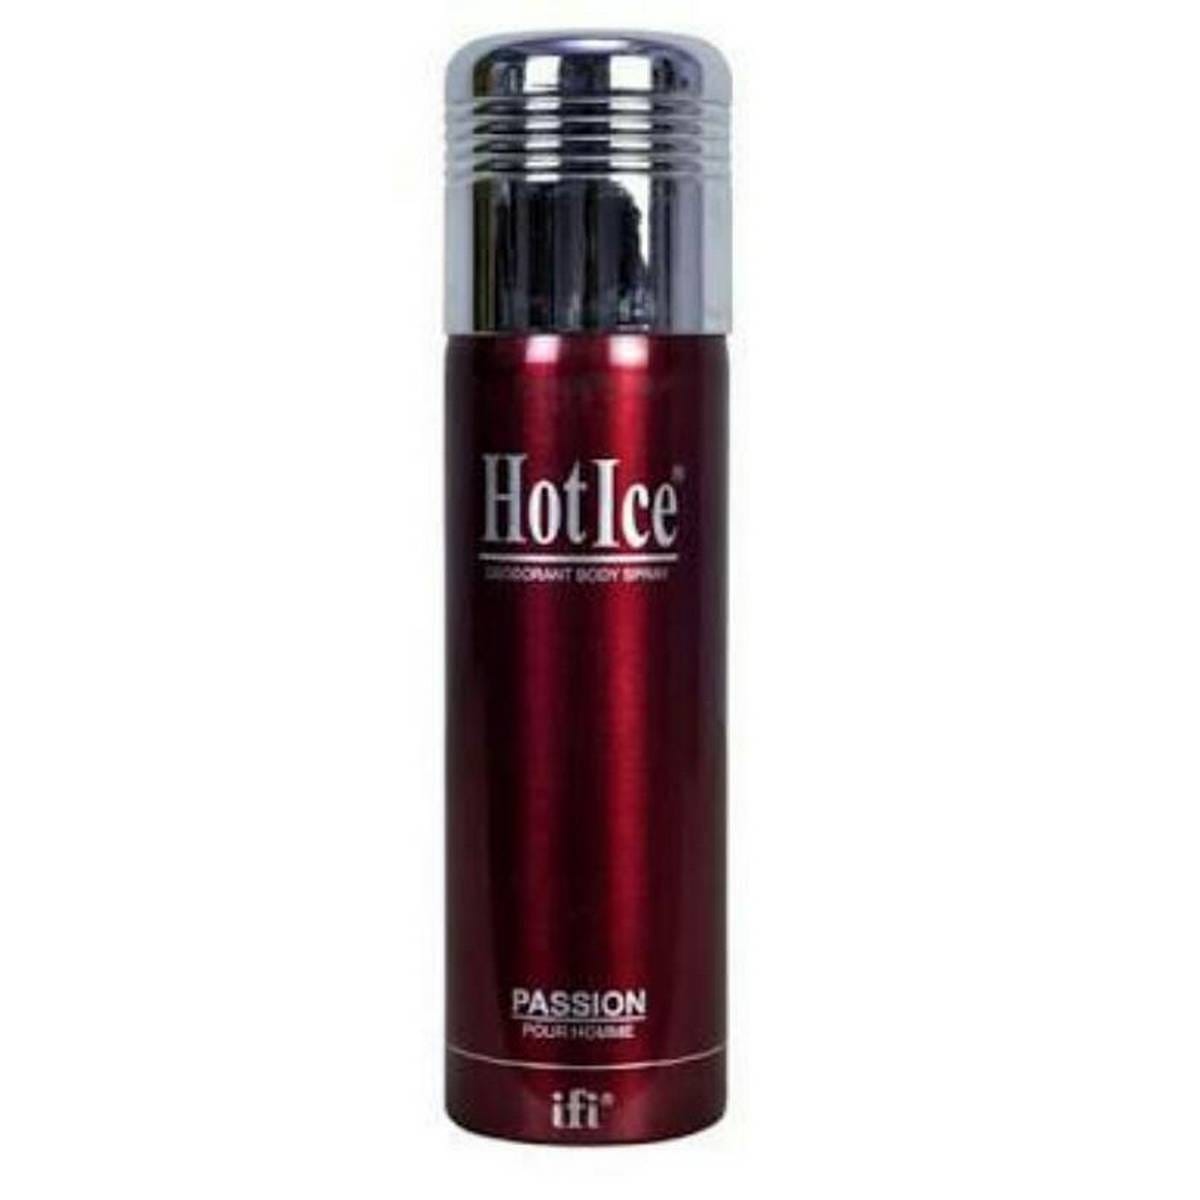 Hot Ice Passion Femme Deodorant Body Spray, For Men, 200ml